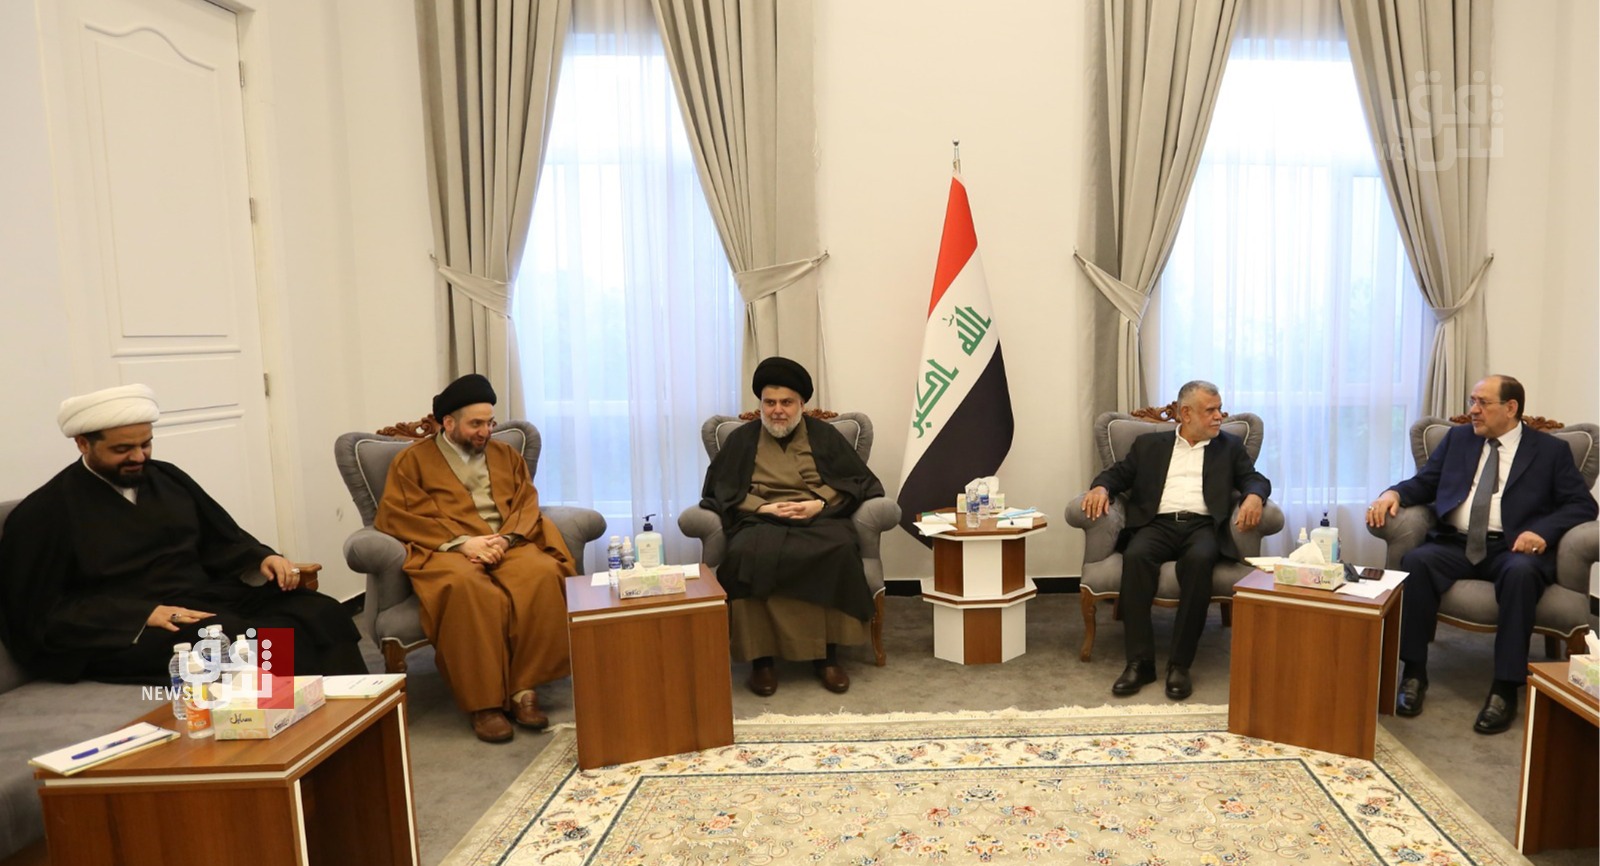 Al-Abadis coalition reveals an international trend to solve the Iraqi political crisis through dialogue